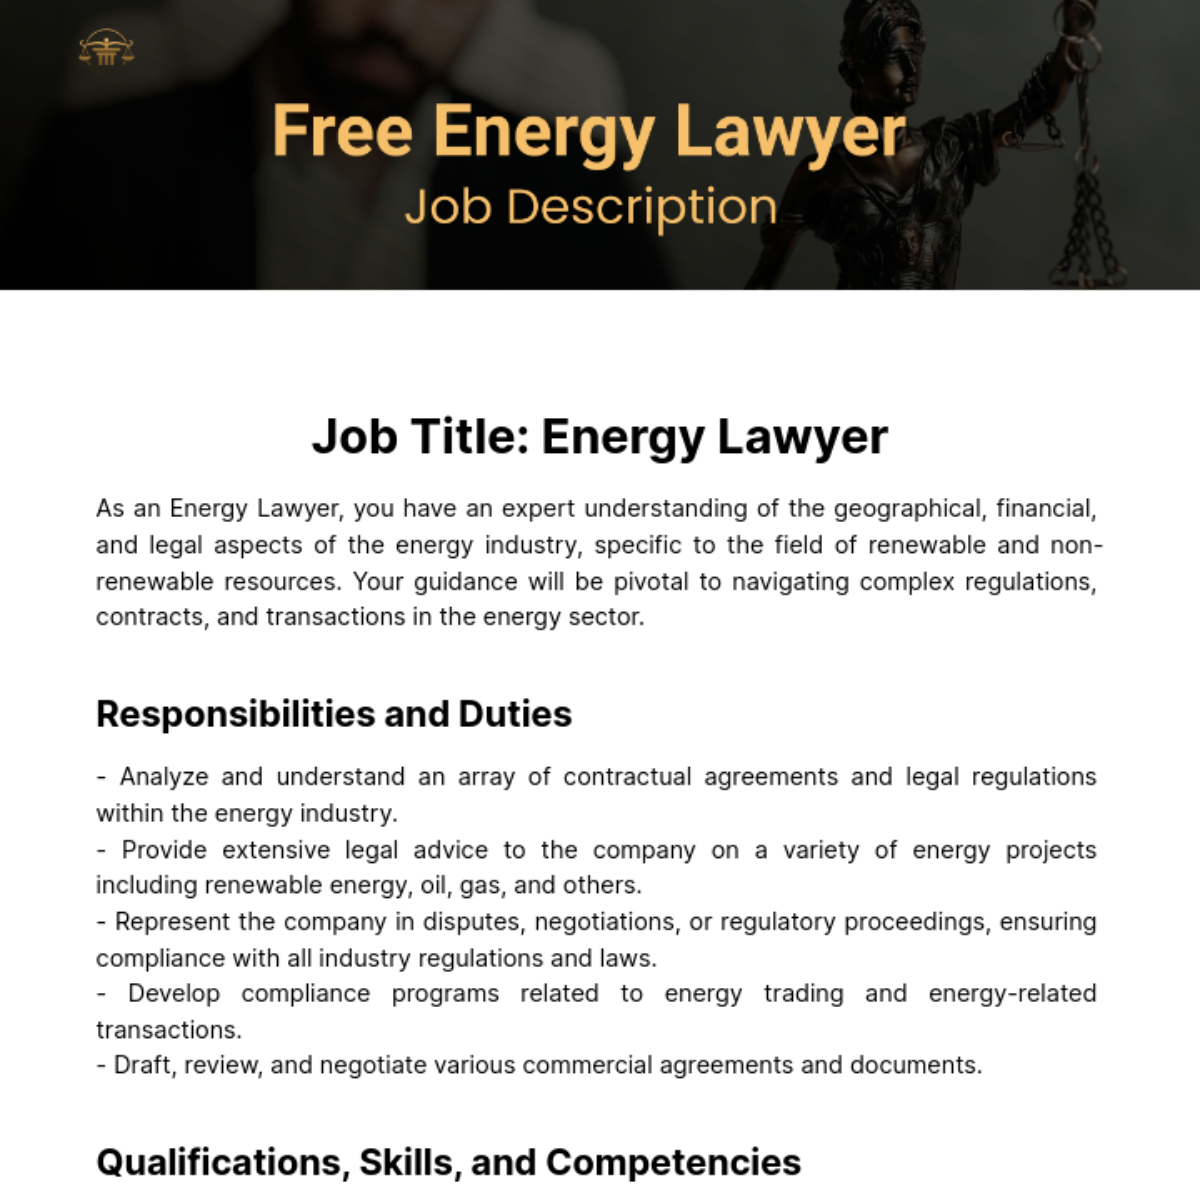 Free Energy Lawyer Job Description Template